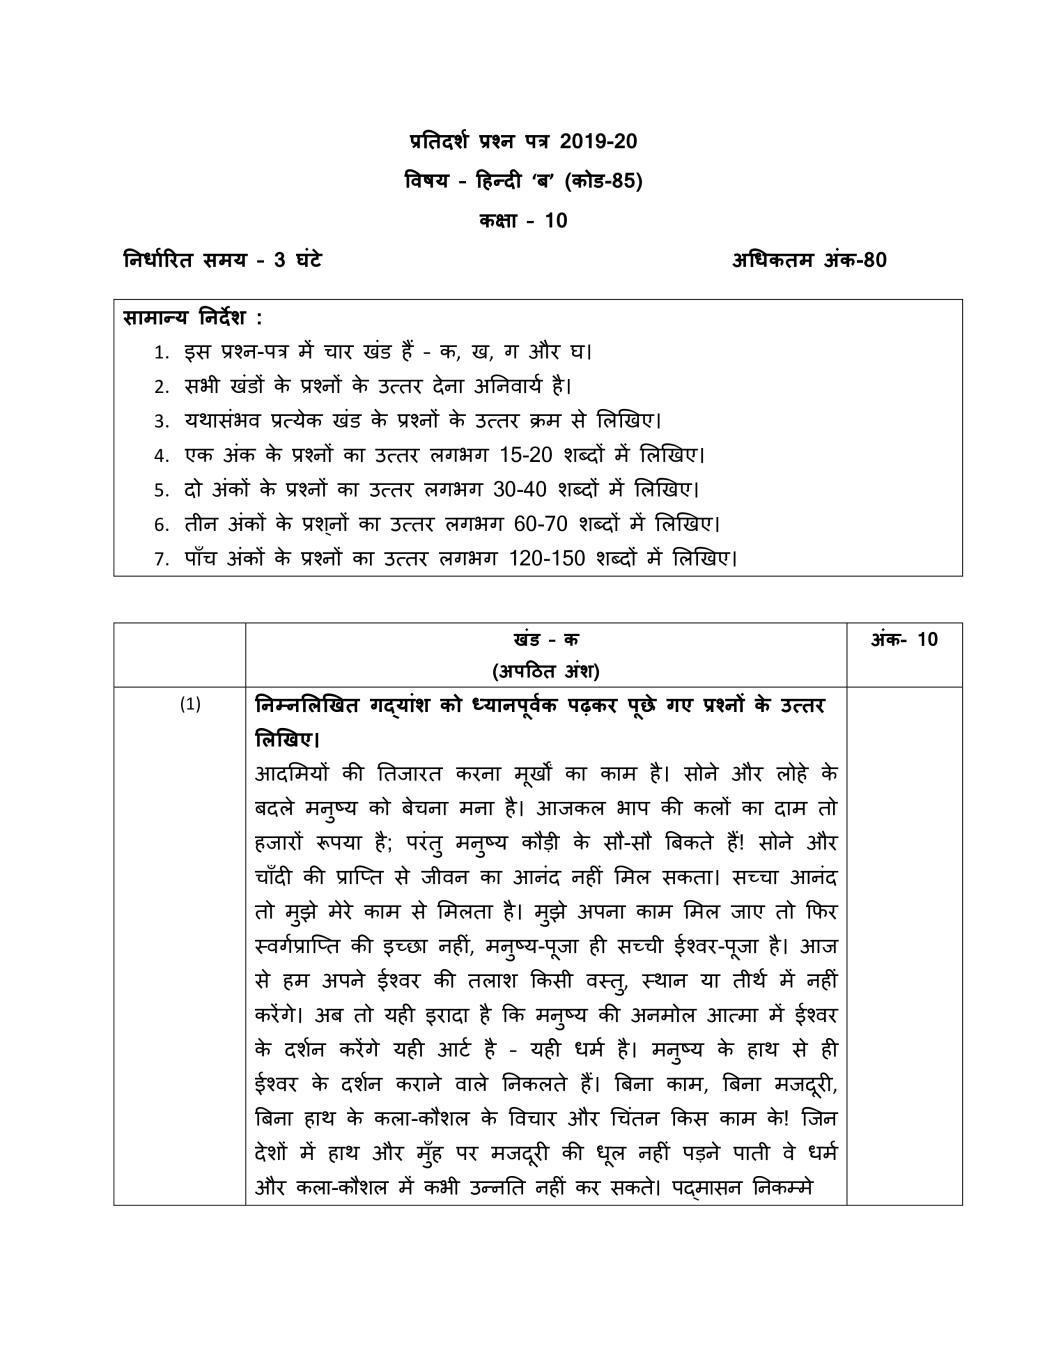 CBSE Class 10 Sample Paper 2020 For Hindi B